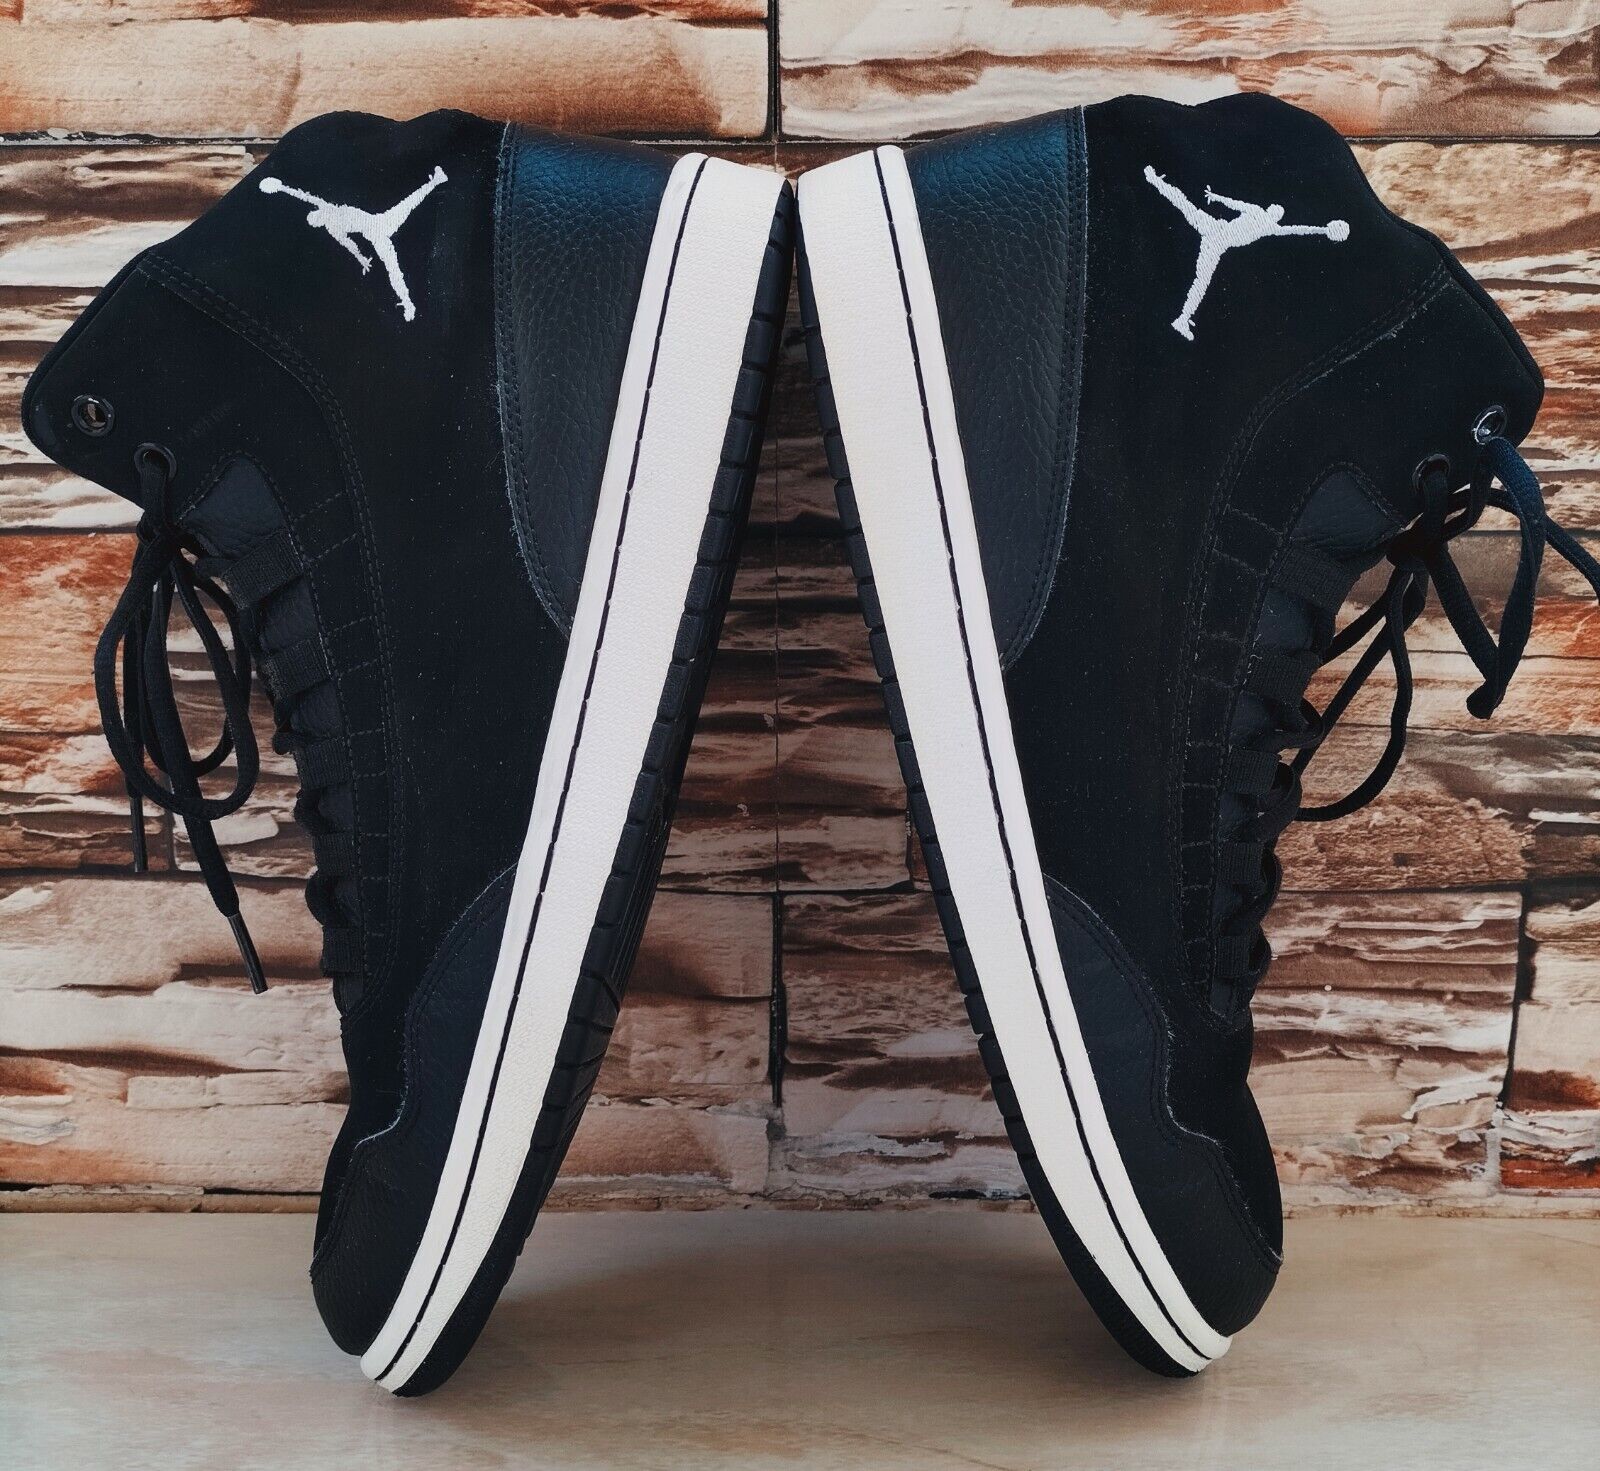 Nike Air Jordan Executive Black X White 820240-011 Sneakers Size US 11.5 | eBay